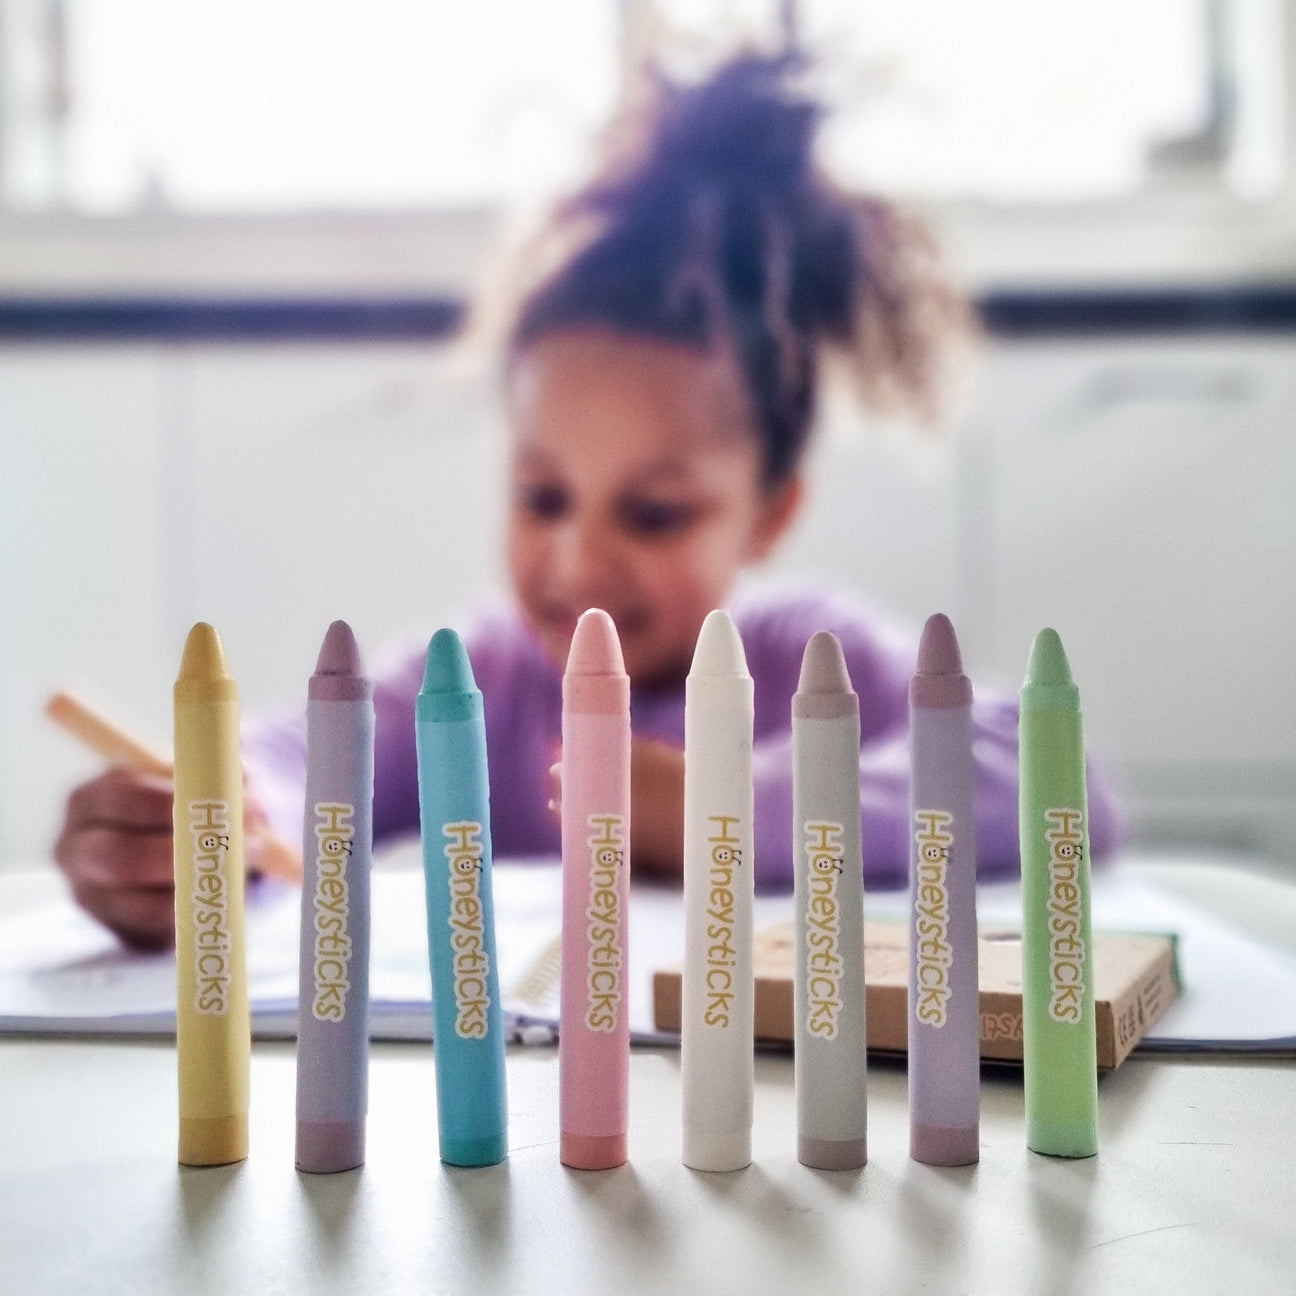 Honeysticks - Jumbo Crayons